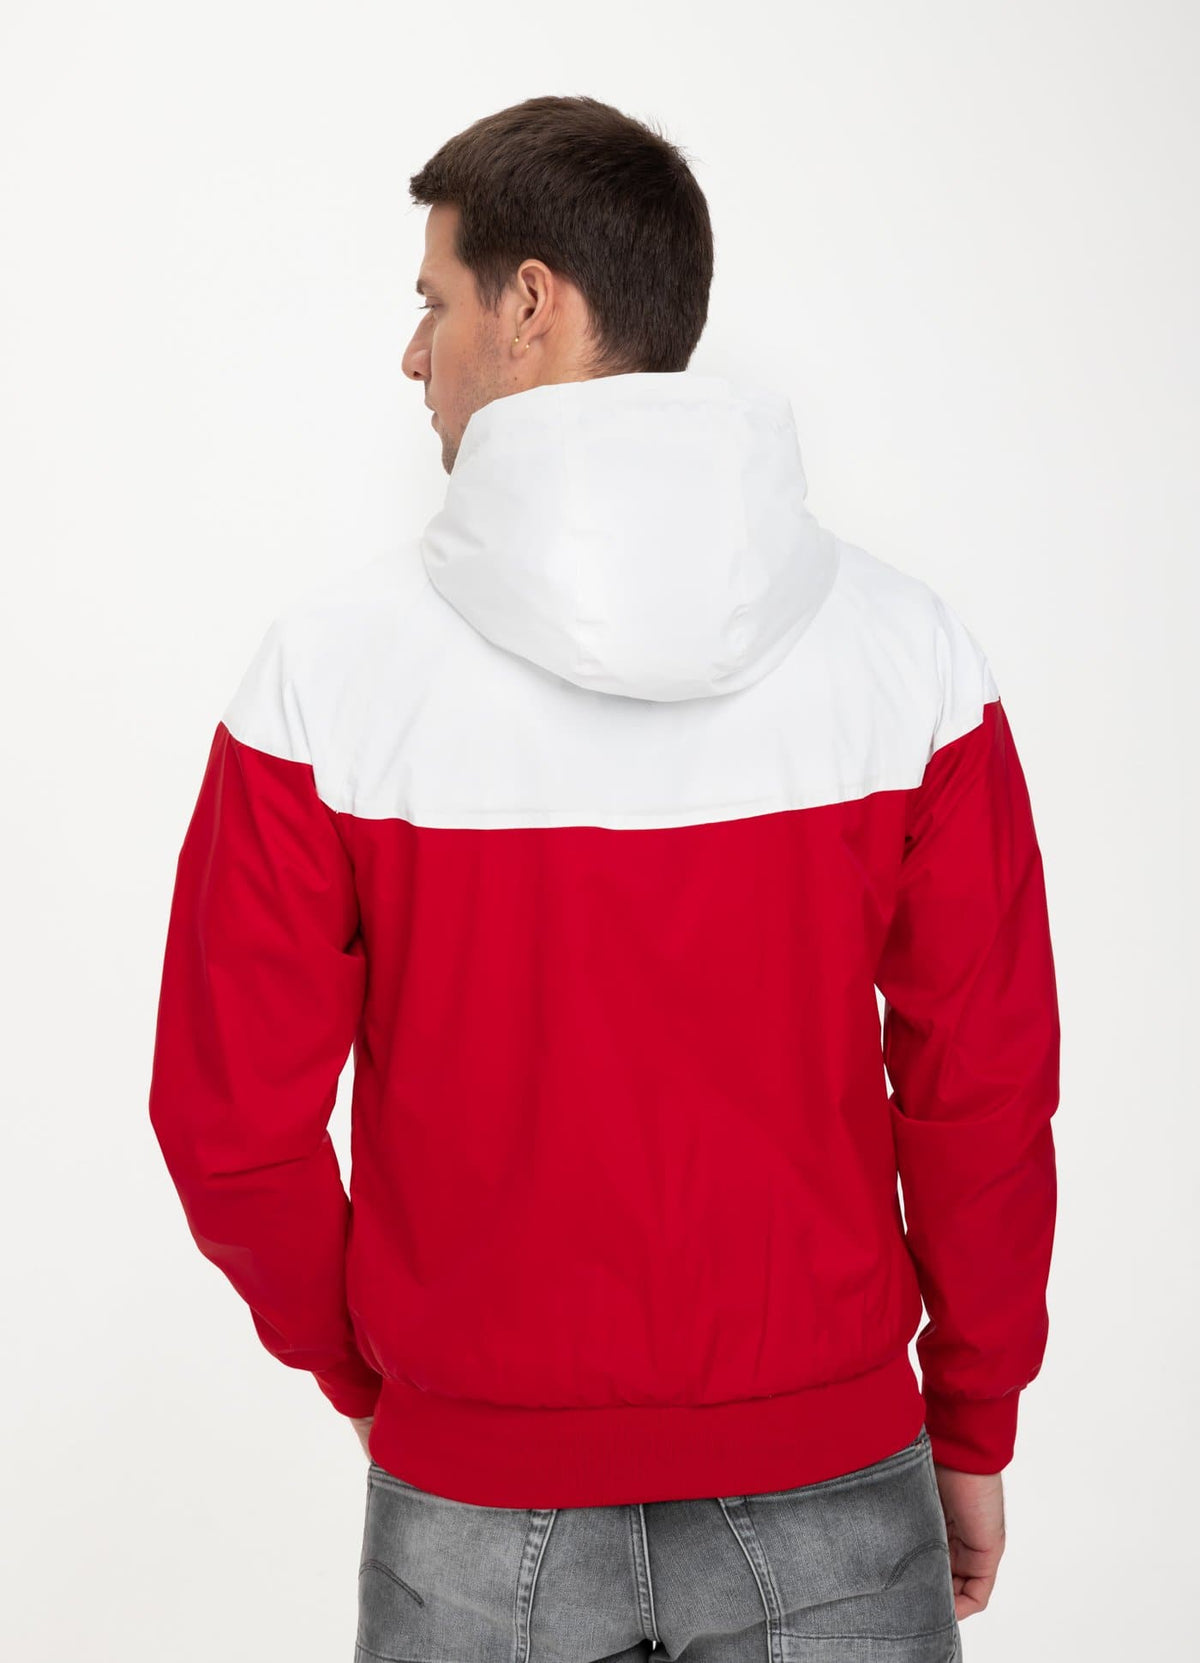 Jacket DIVISION Red/White - Pitbull West Coast International Store 